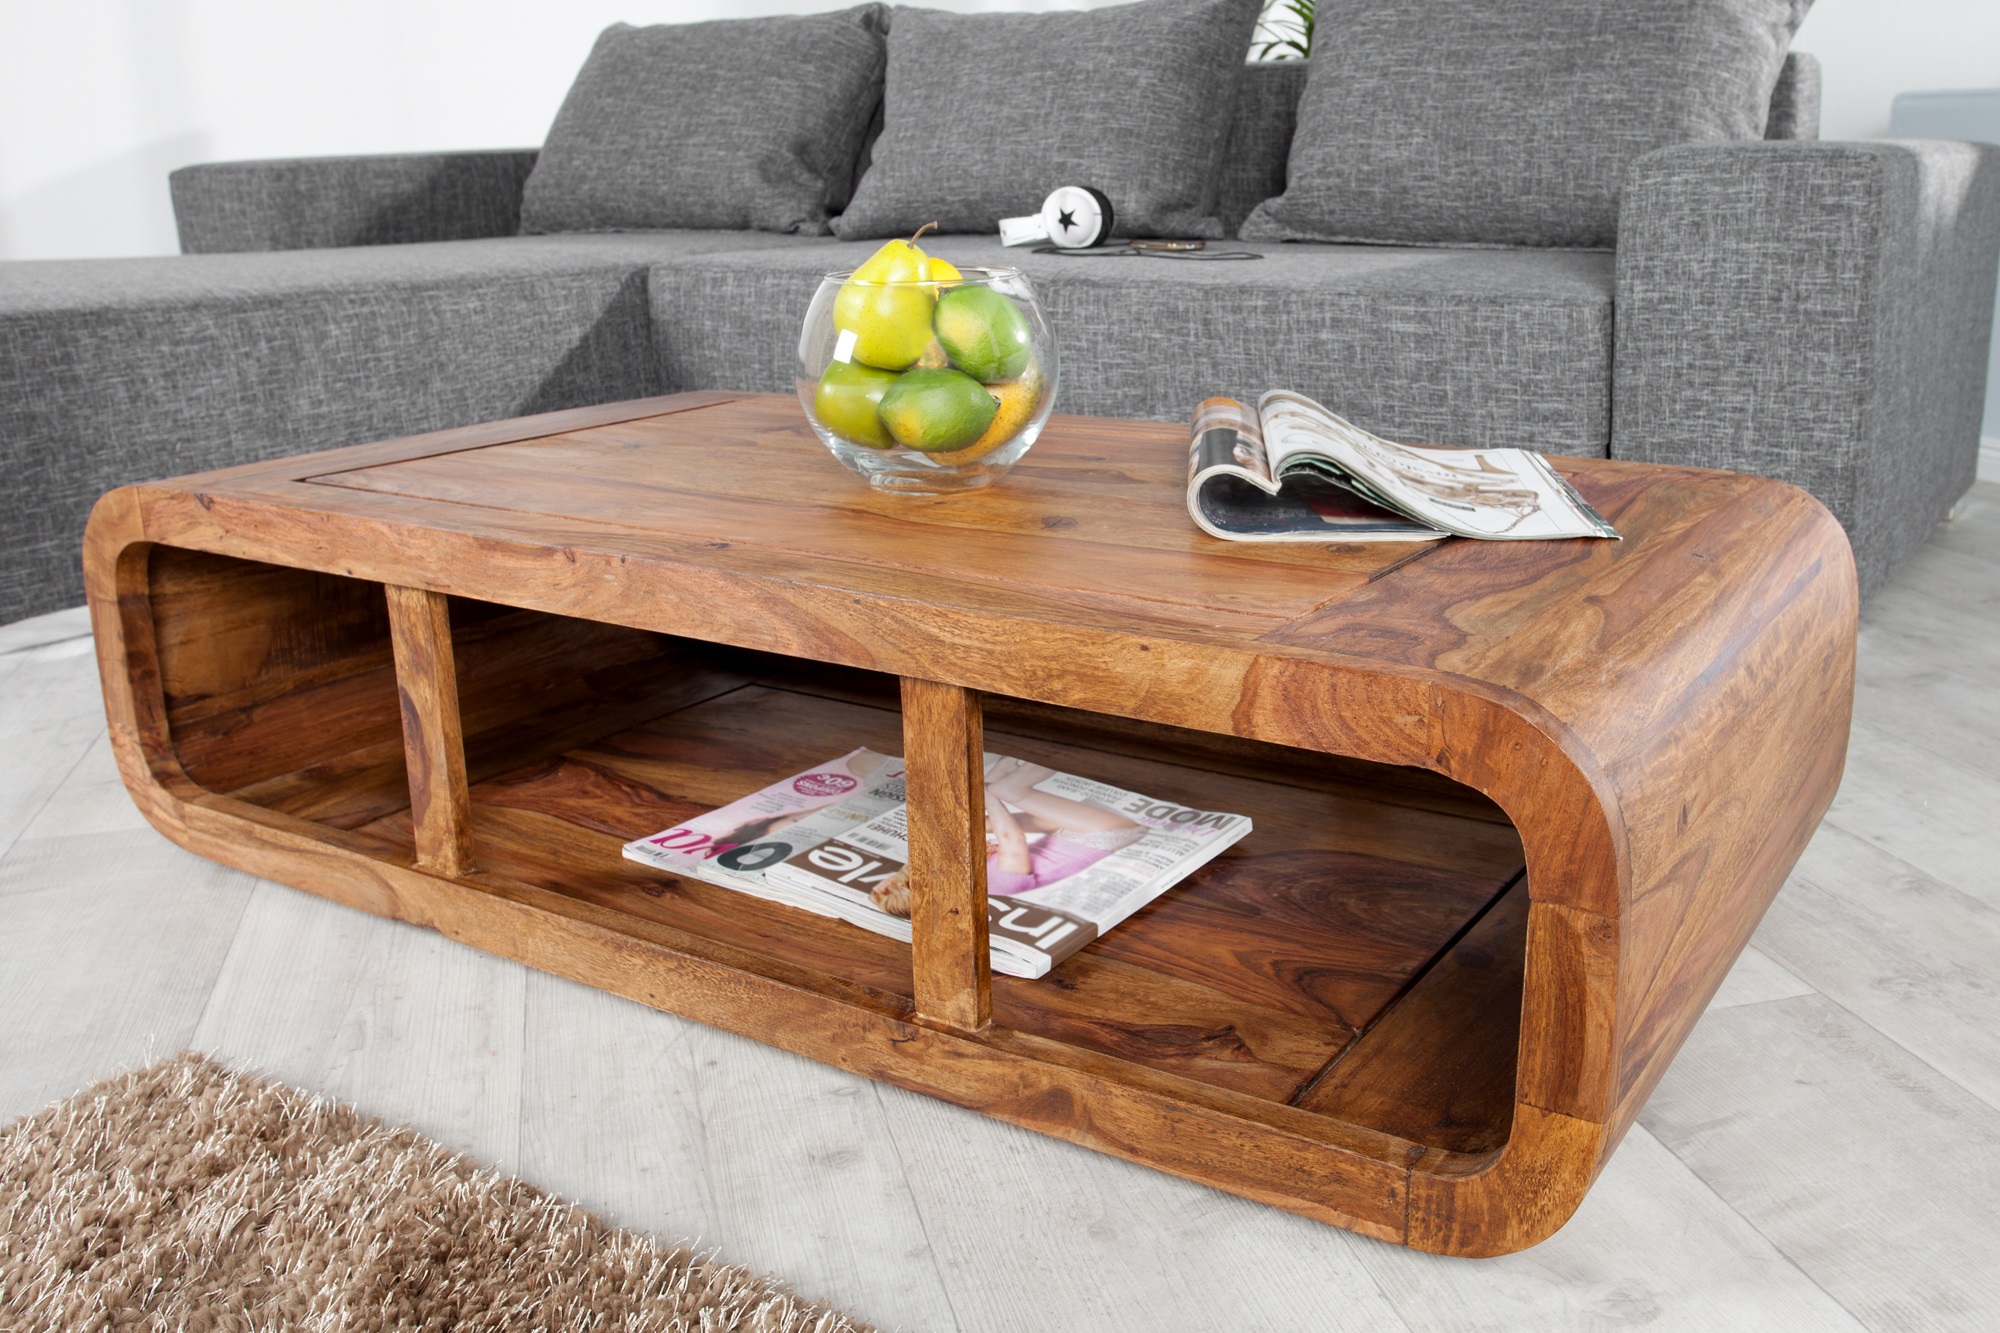 inkt Lelie Snel moderne massief houten meubelen | meubeldeals.nl